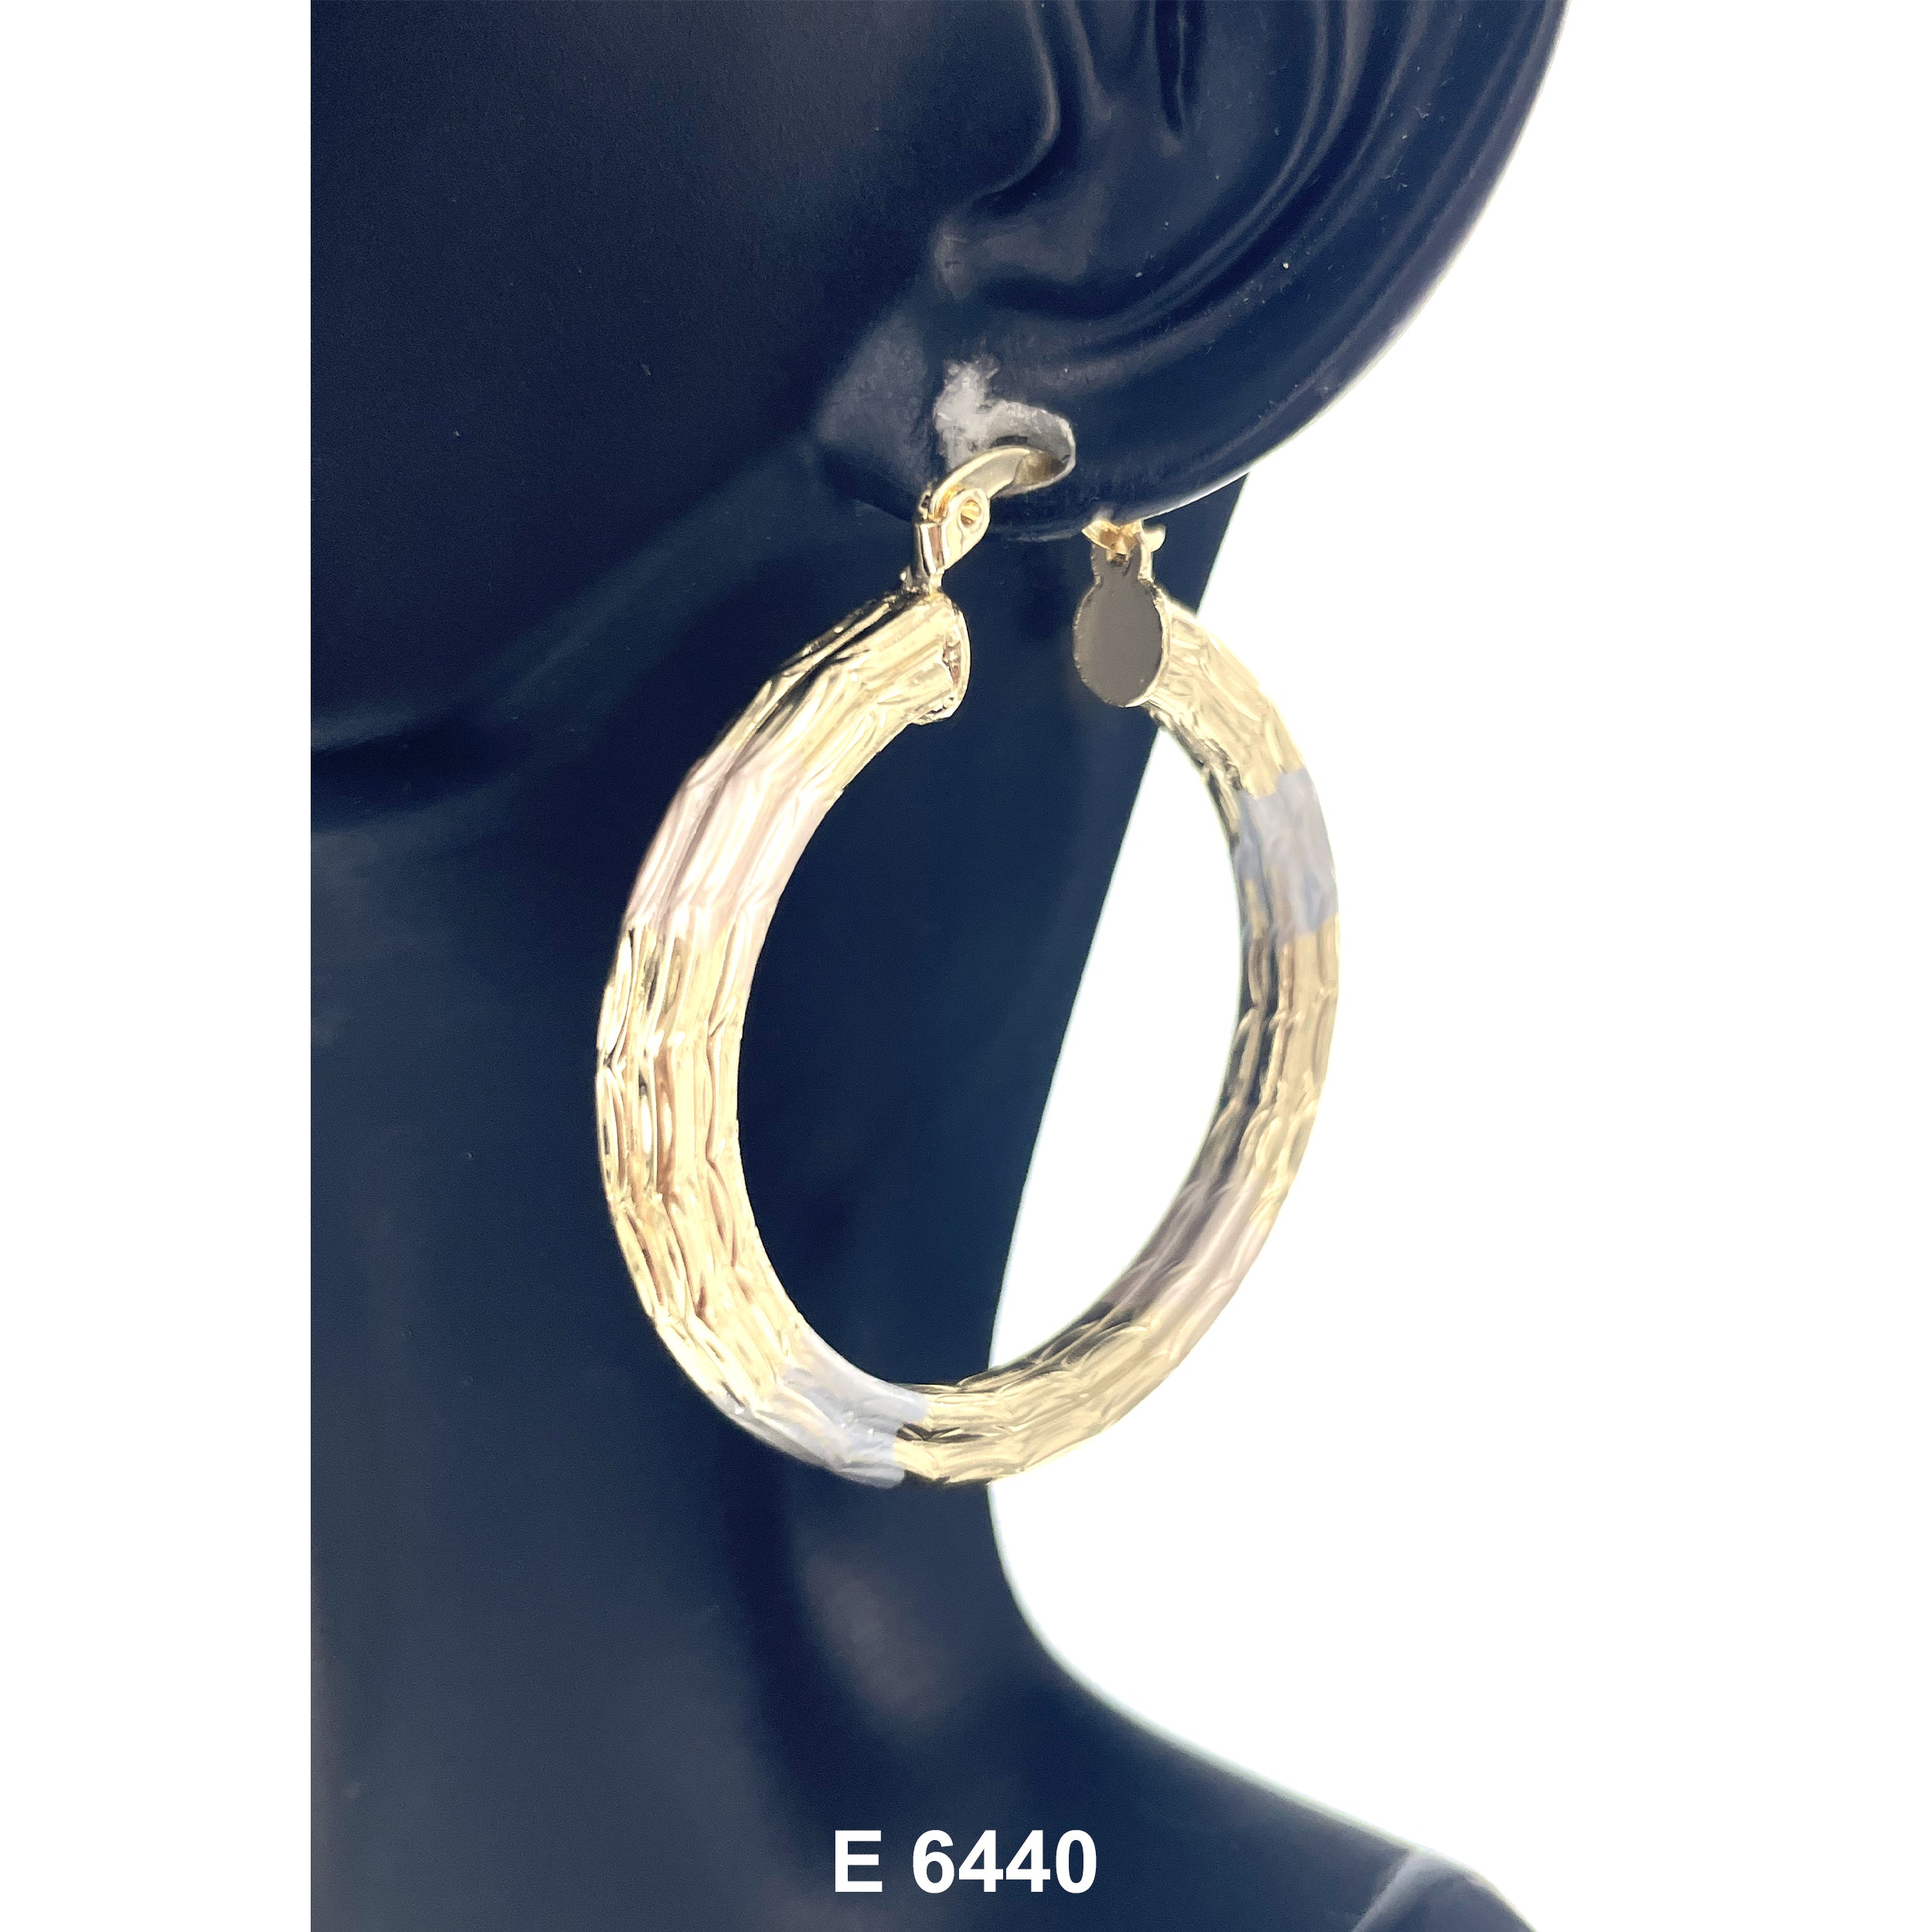 Engraved Hoop Earrings E 6440